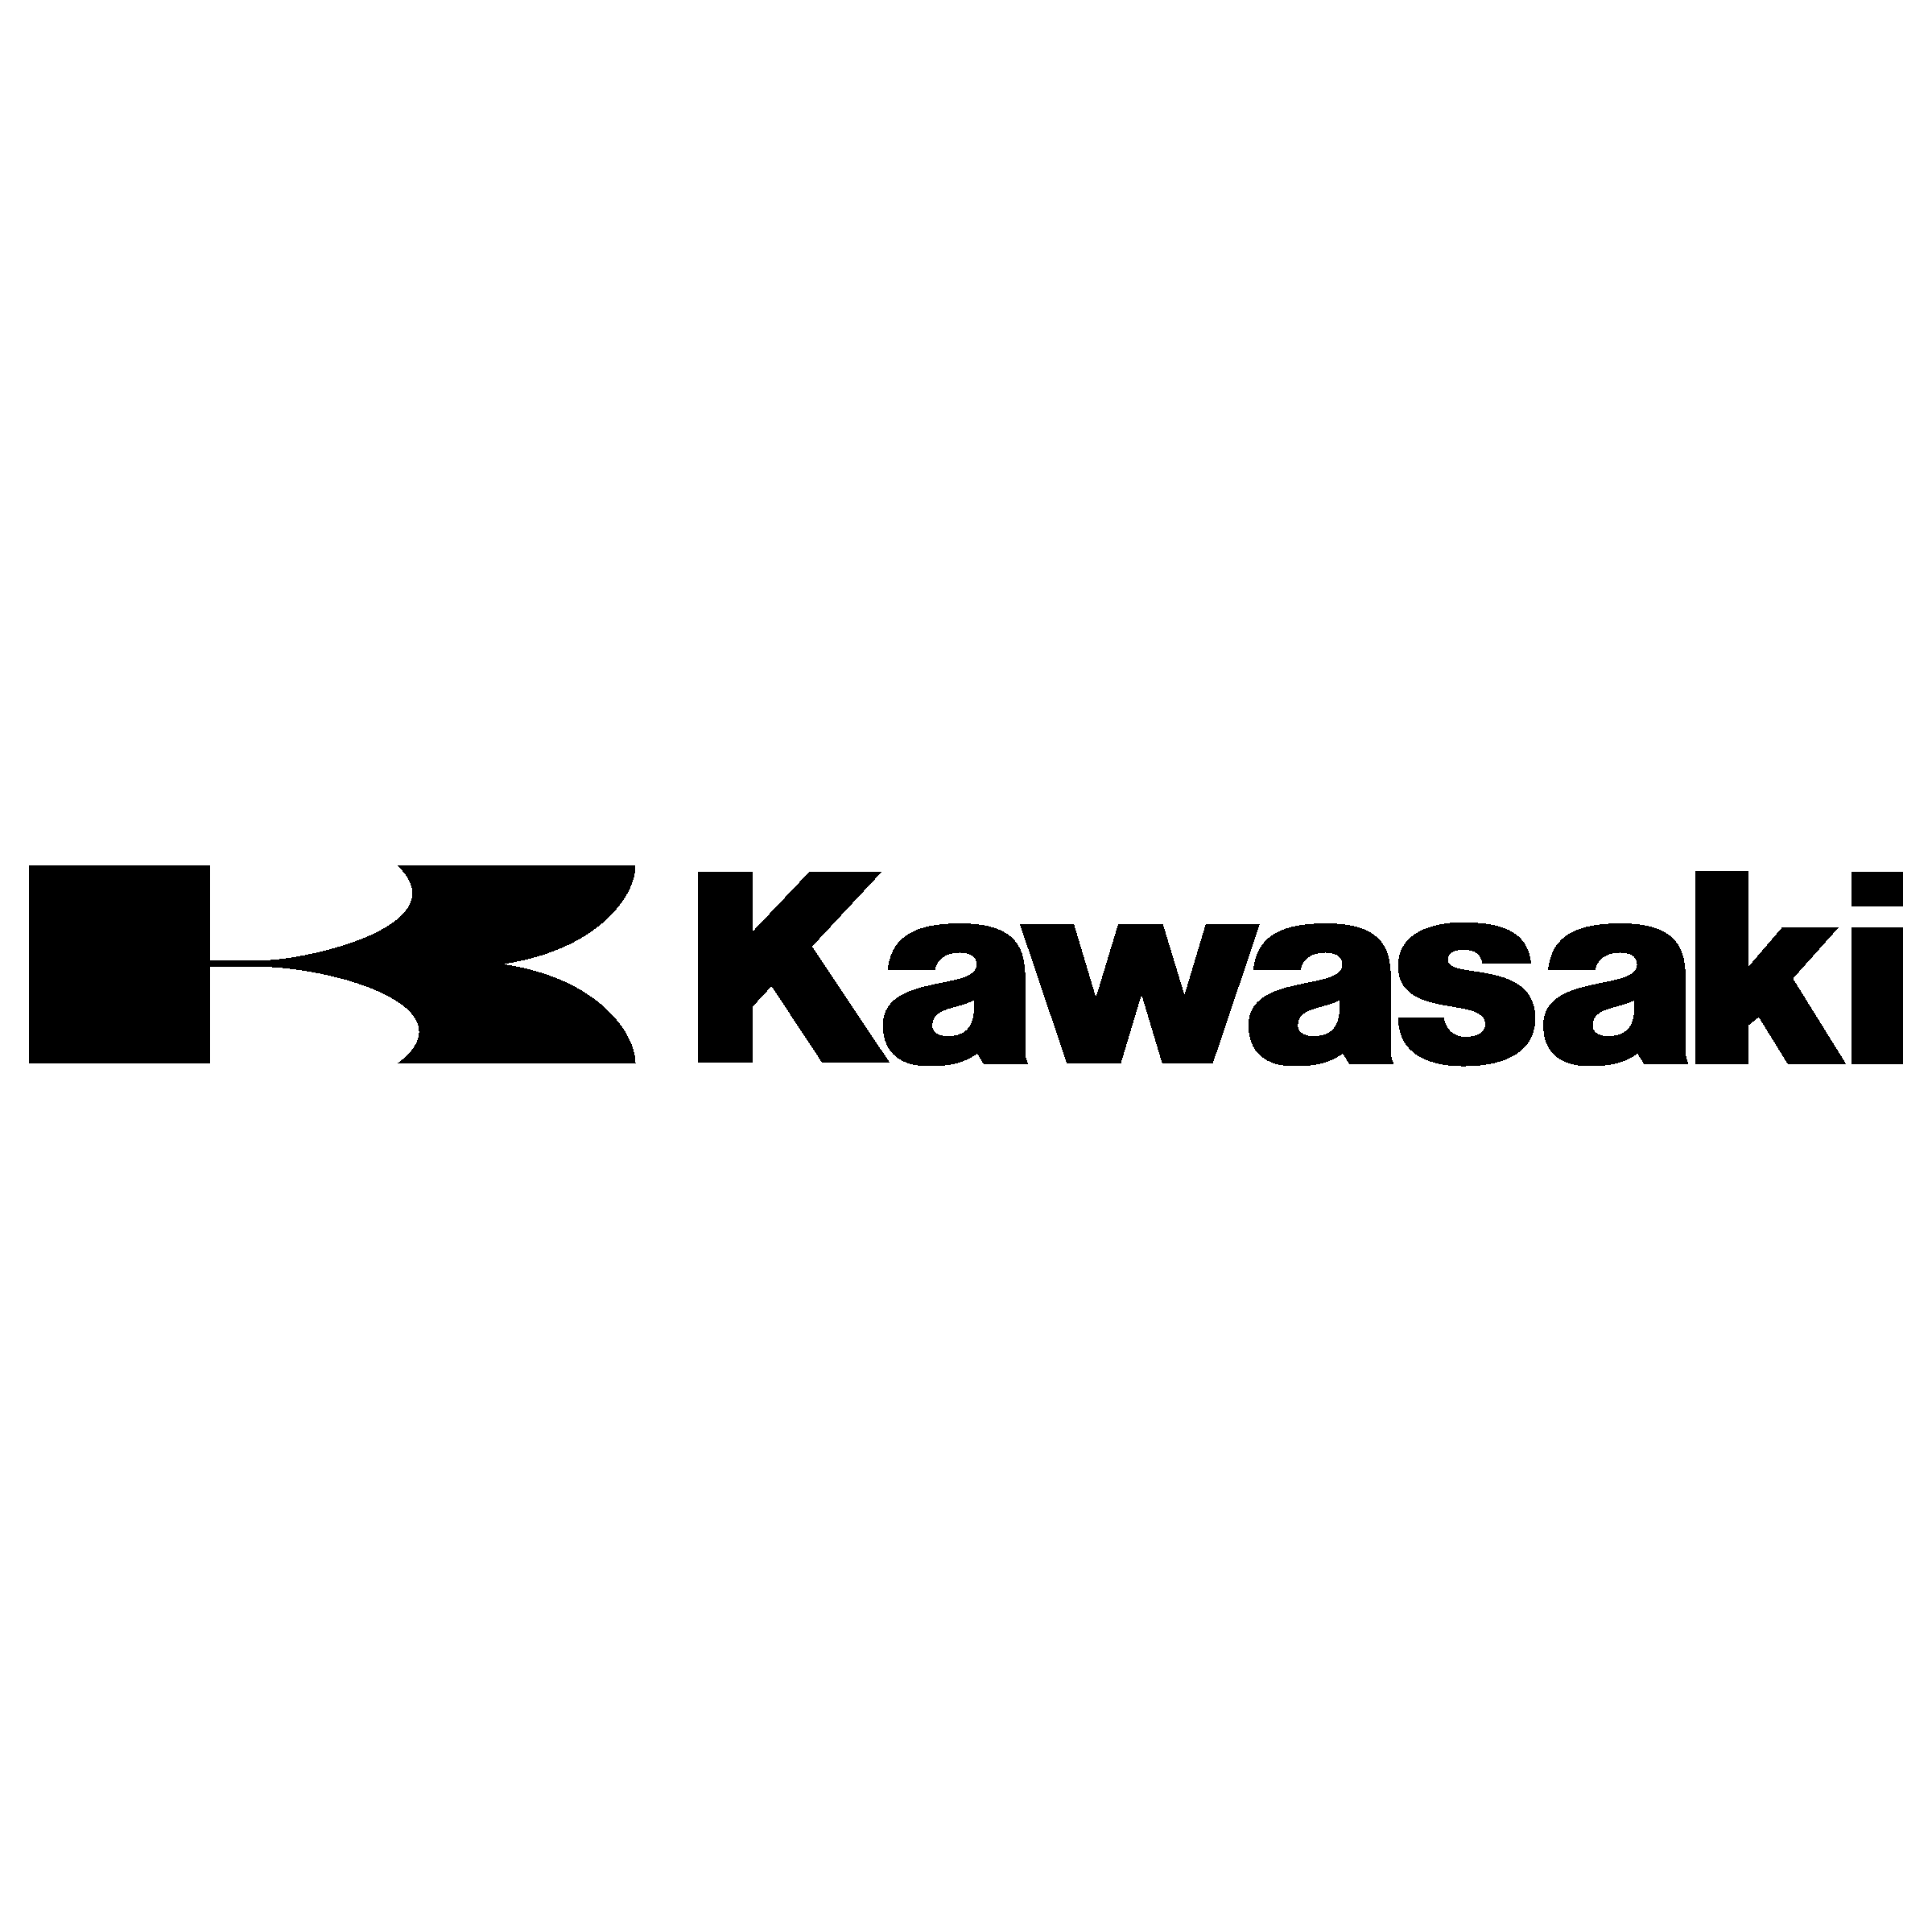 Black Kawasaki Logo - Kawasaki Logo PNG Transparent & SVG Vector